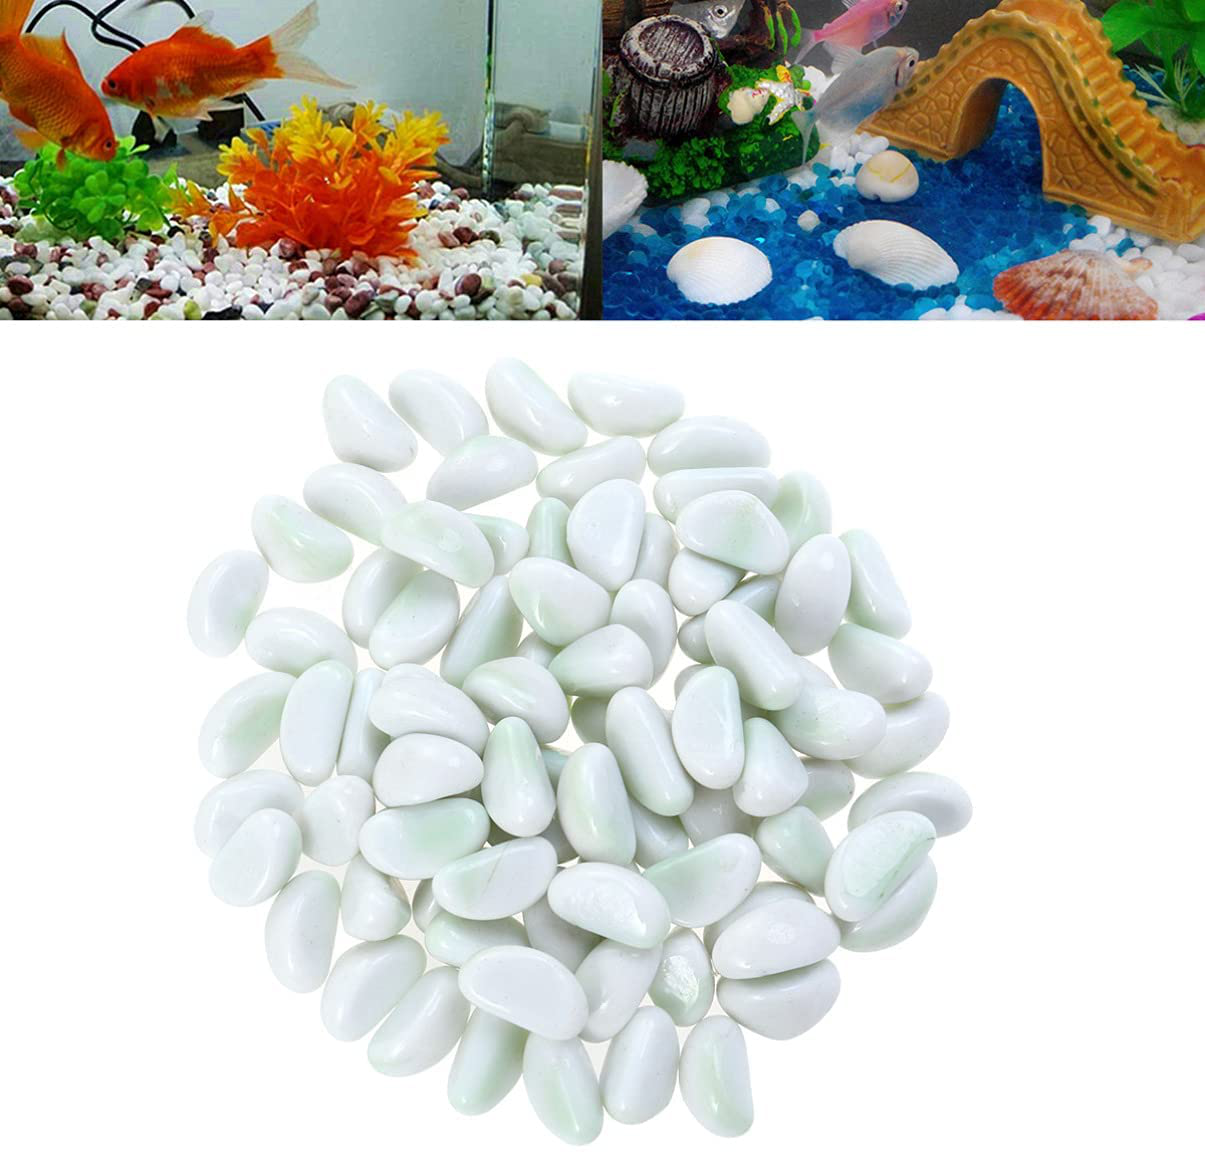 Balacoo Aquarium Natural Gravel Polished Substrate Stones Fish Tank Decorative Pebbles Underwater Landscaping for Vase Fillers,Plants Bonsai 500G (White)